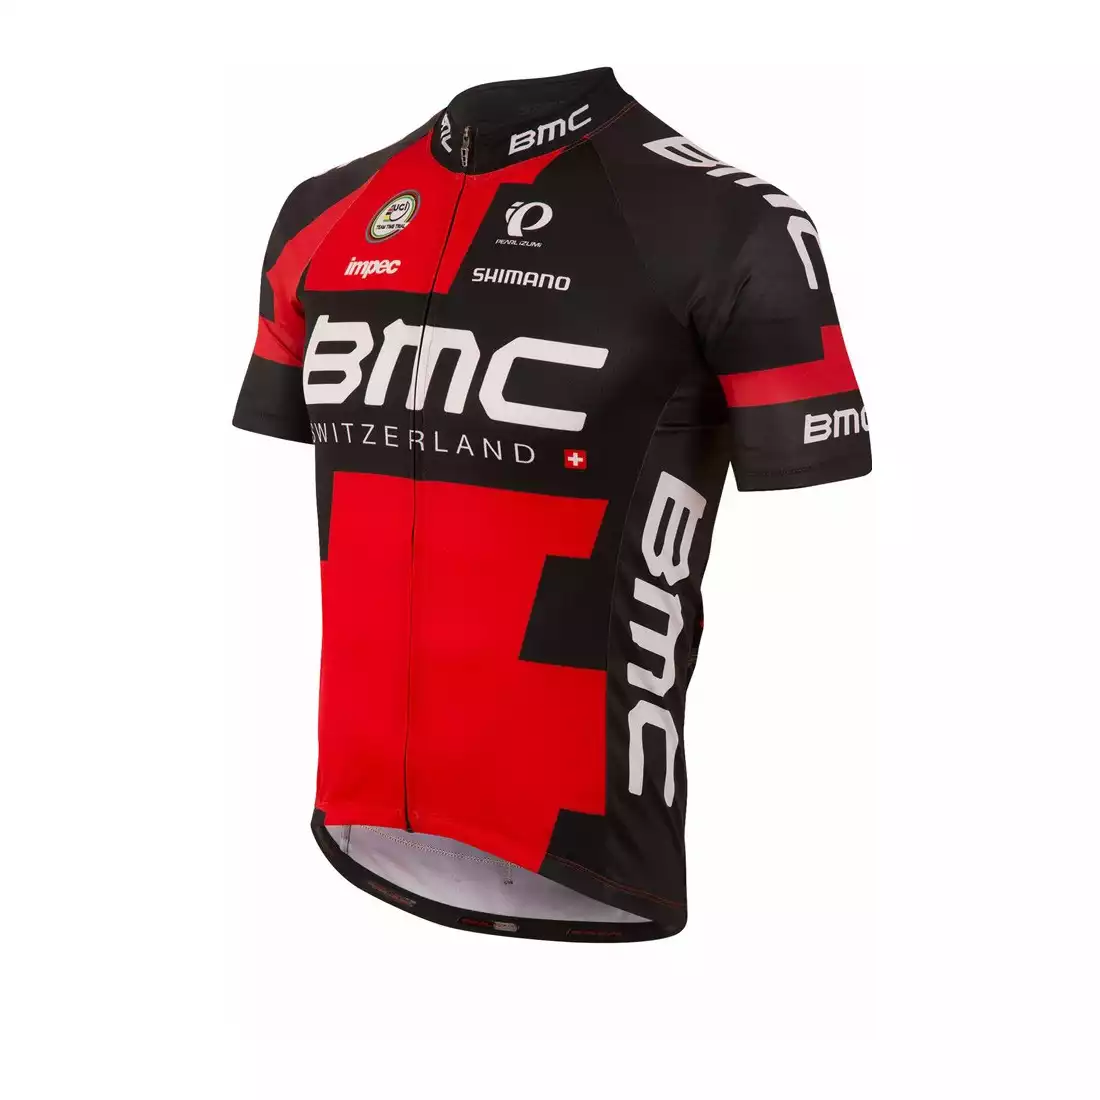 PEARL IZUMI ELITE BMC rowerowa koszulka teamowa 11121604